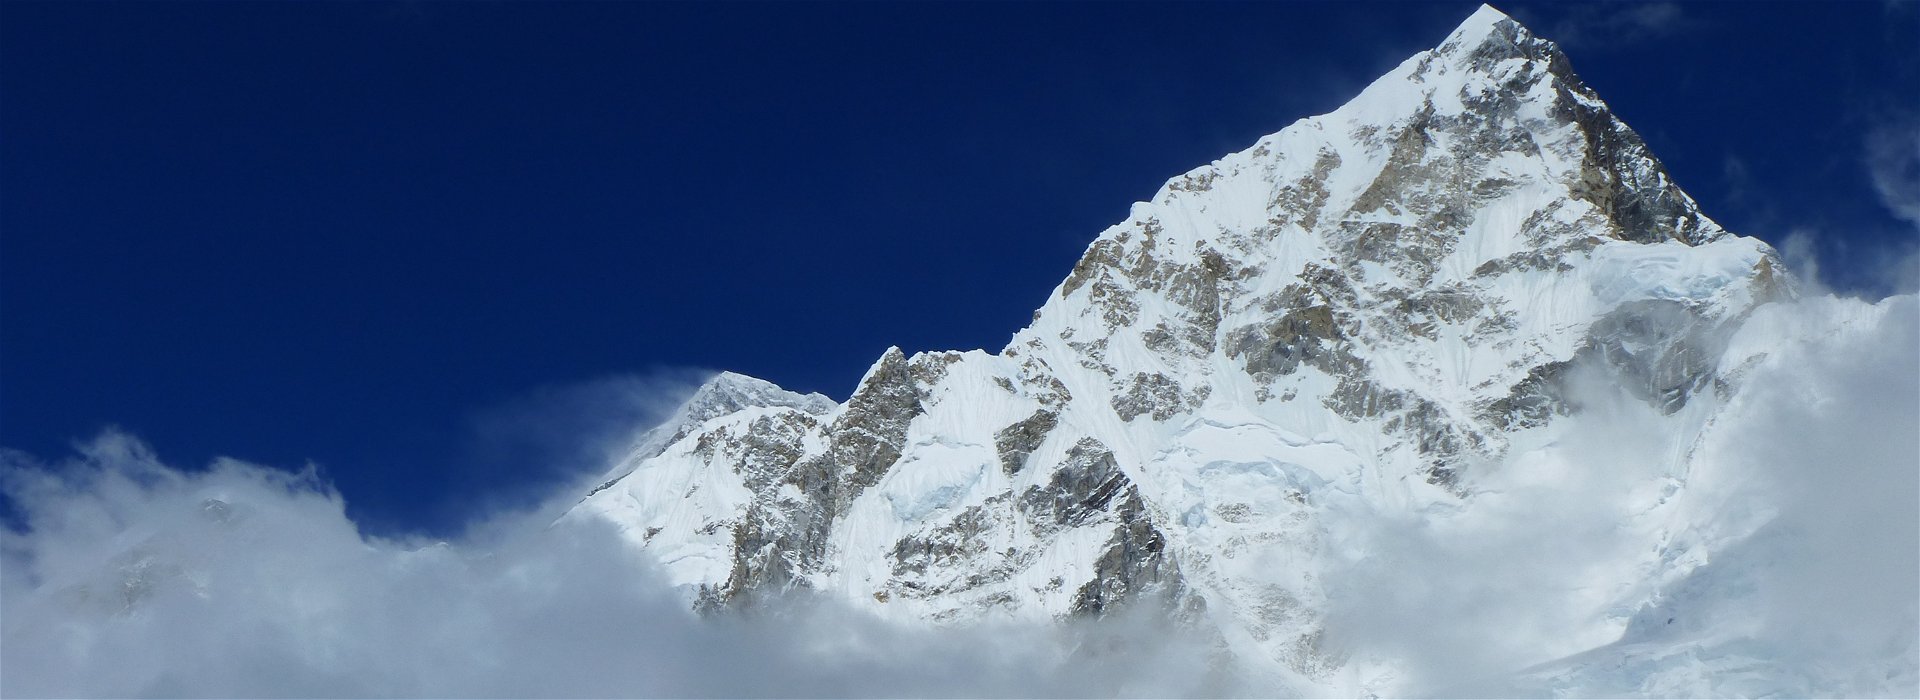 Mount Everest Marathon - Training Blog